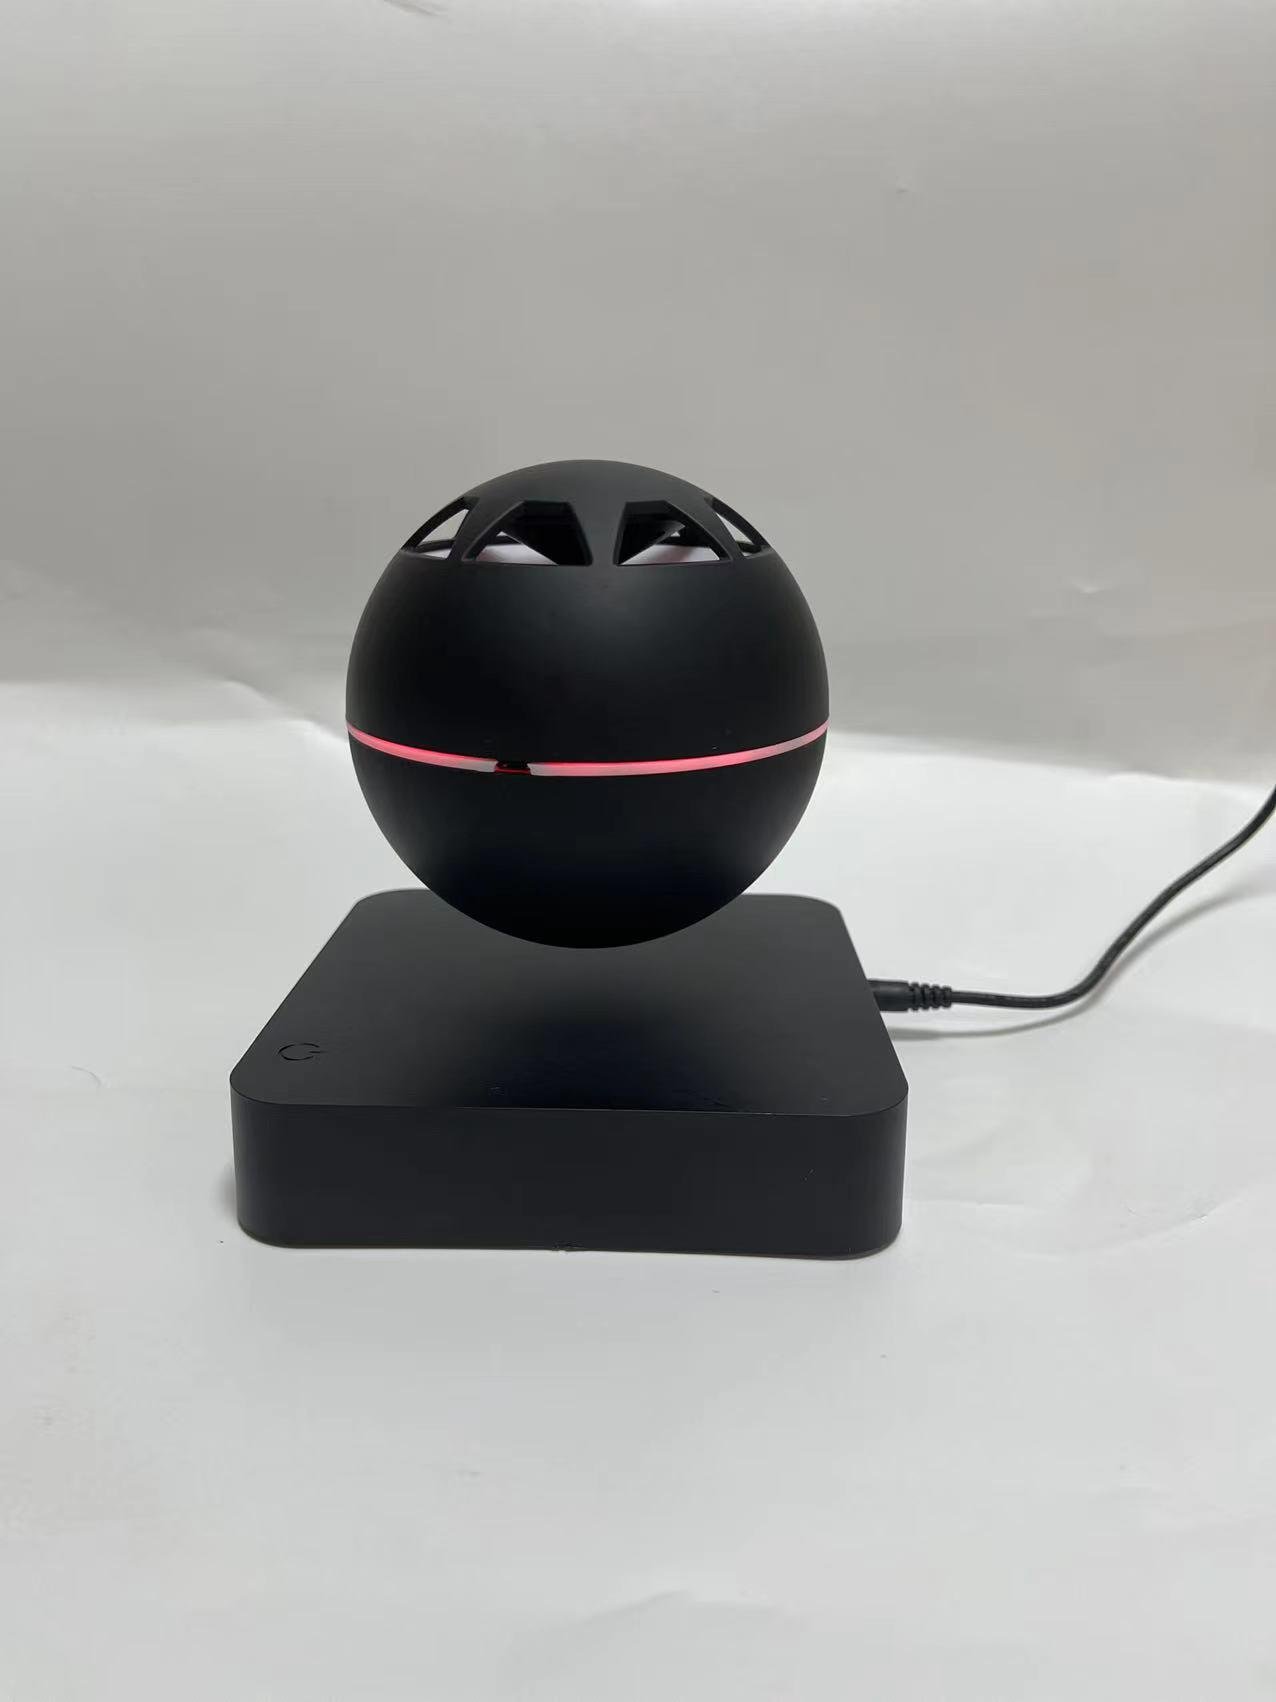 wooden base magnetic levitaiton desk floating bluetooth speaker light for gift  2